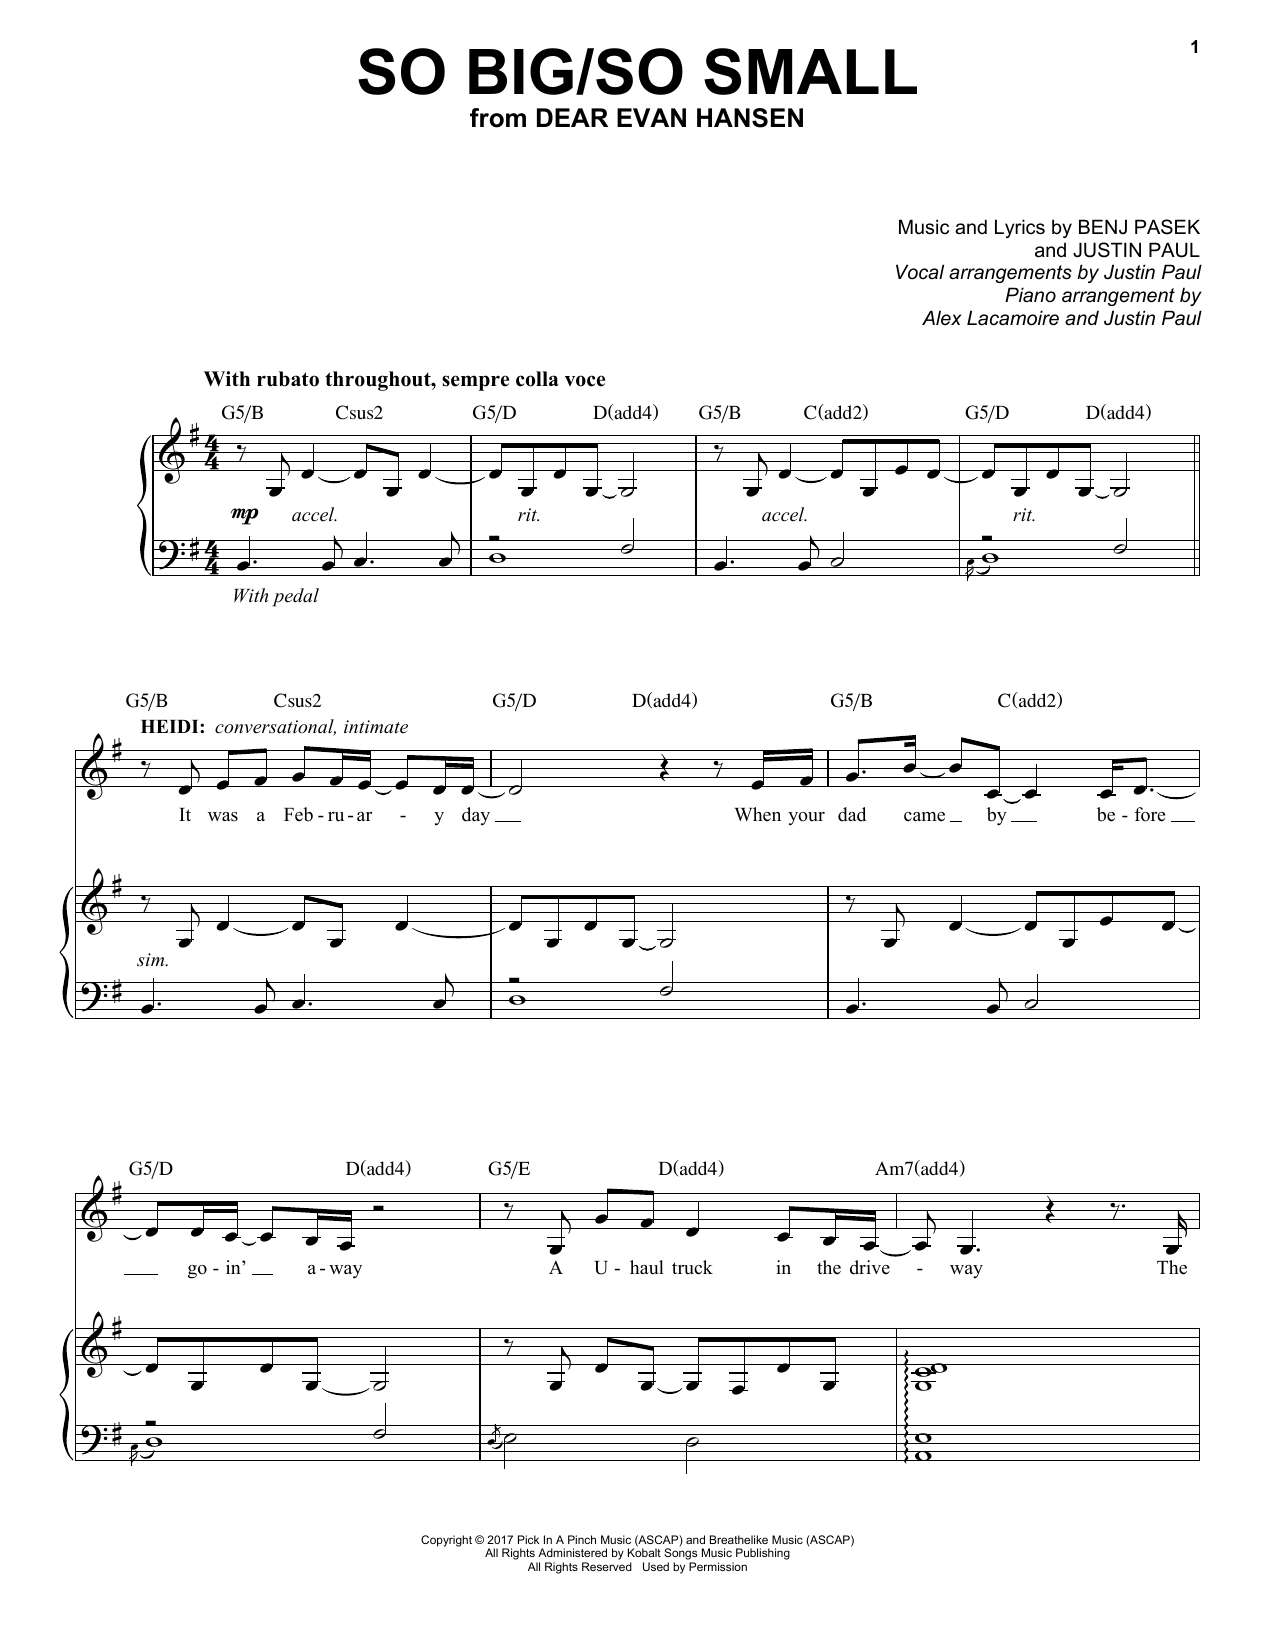 Pasek & Paul So Big/So Small (from Dear Evan Hansen) Sheet Music Notes & Chords for Guitar Chords/Lyrics - Download or Print PDF